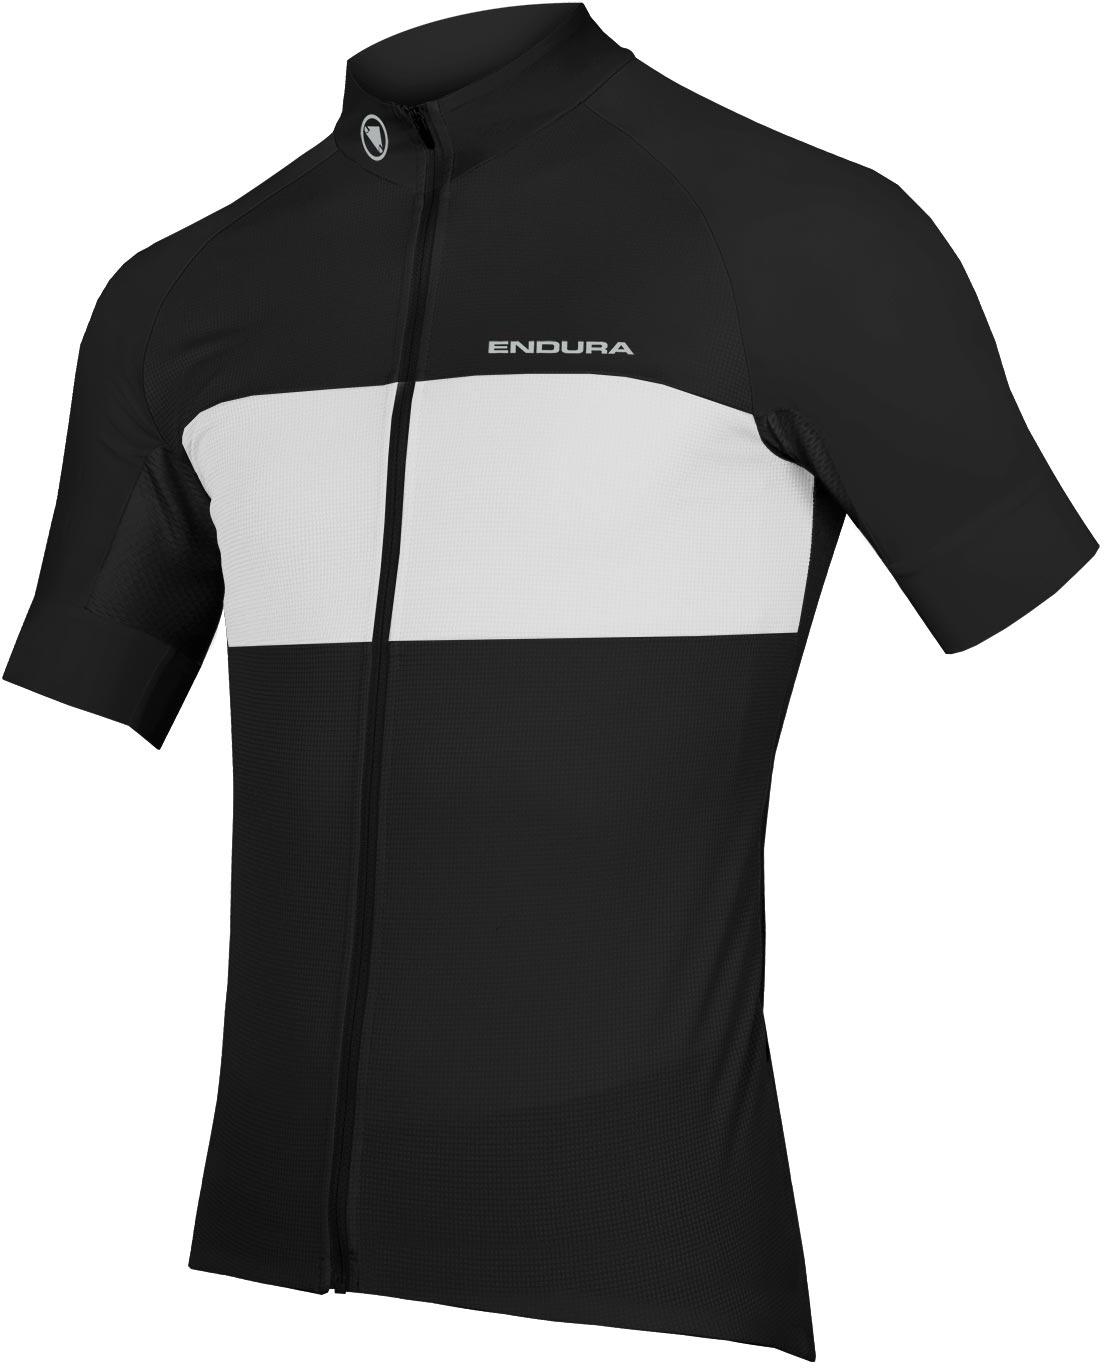 Endura Fs260-pro Short Sleeve Cycling Jersey Ii - Black